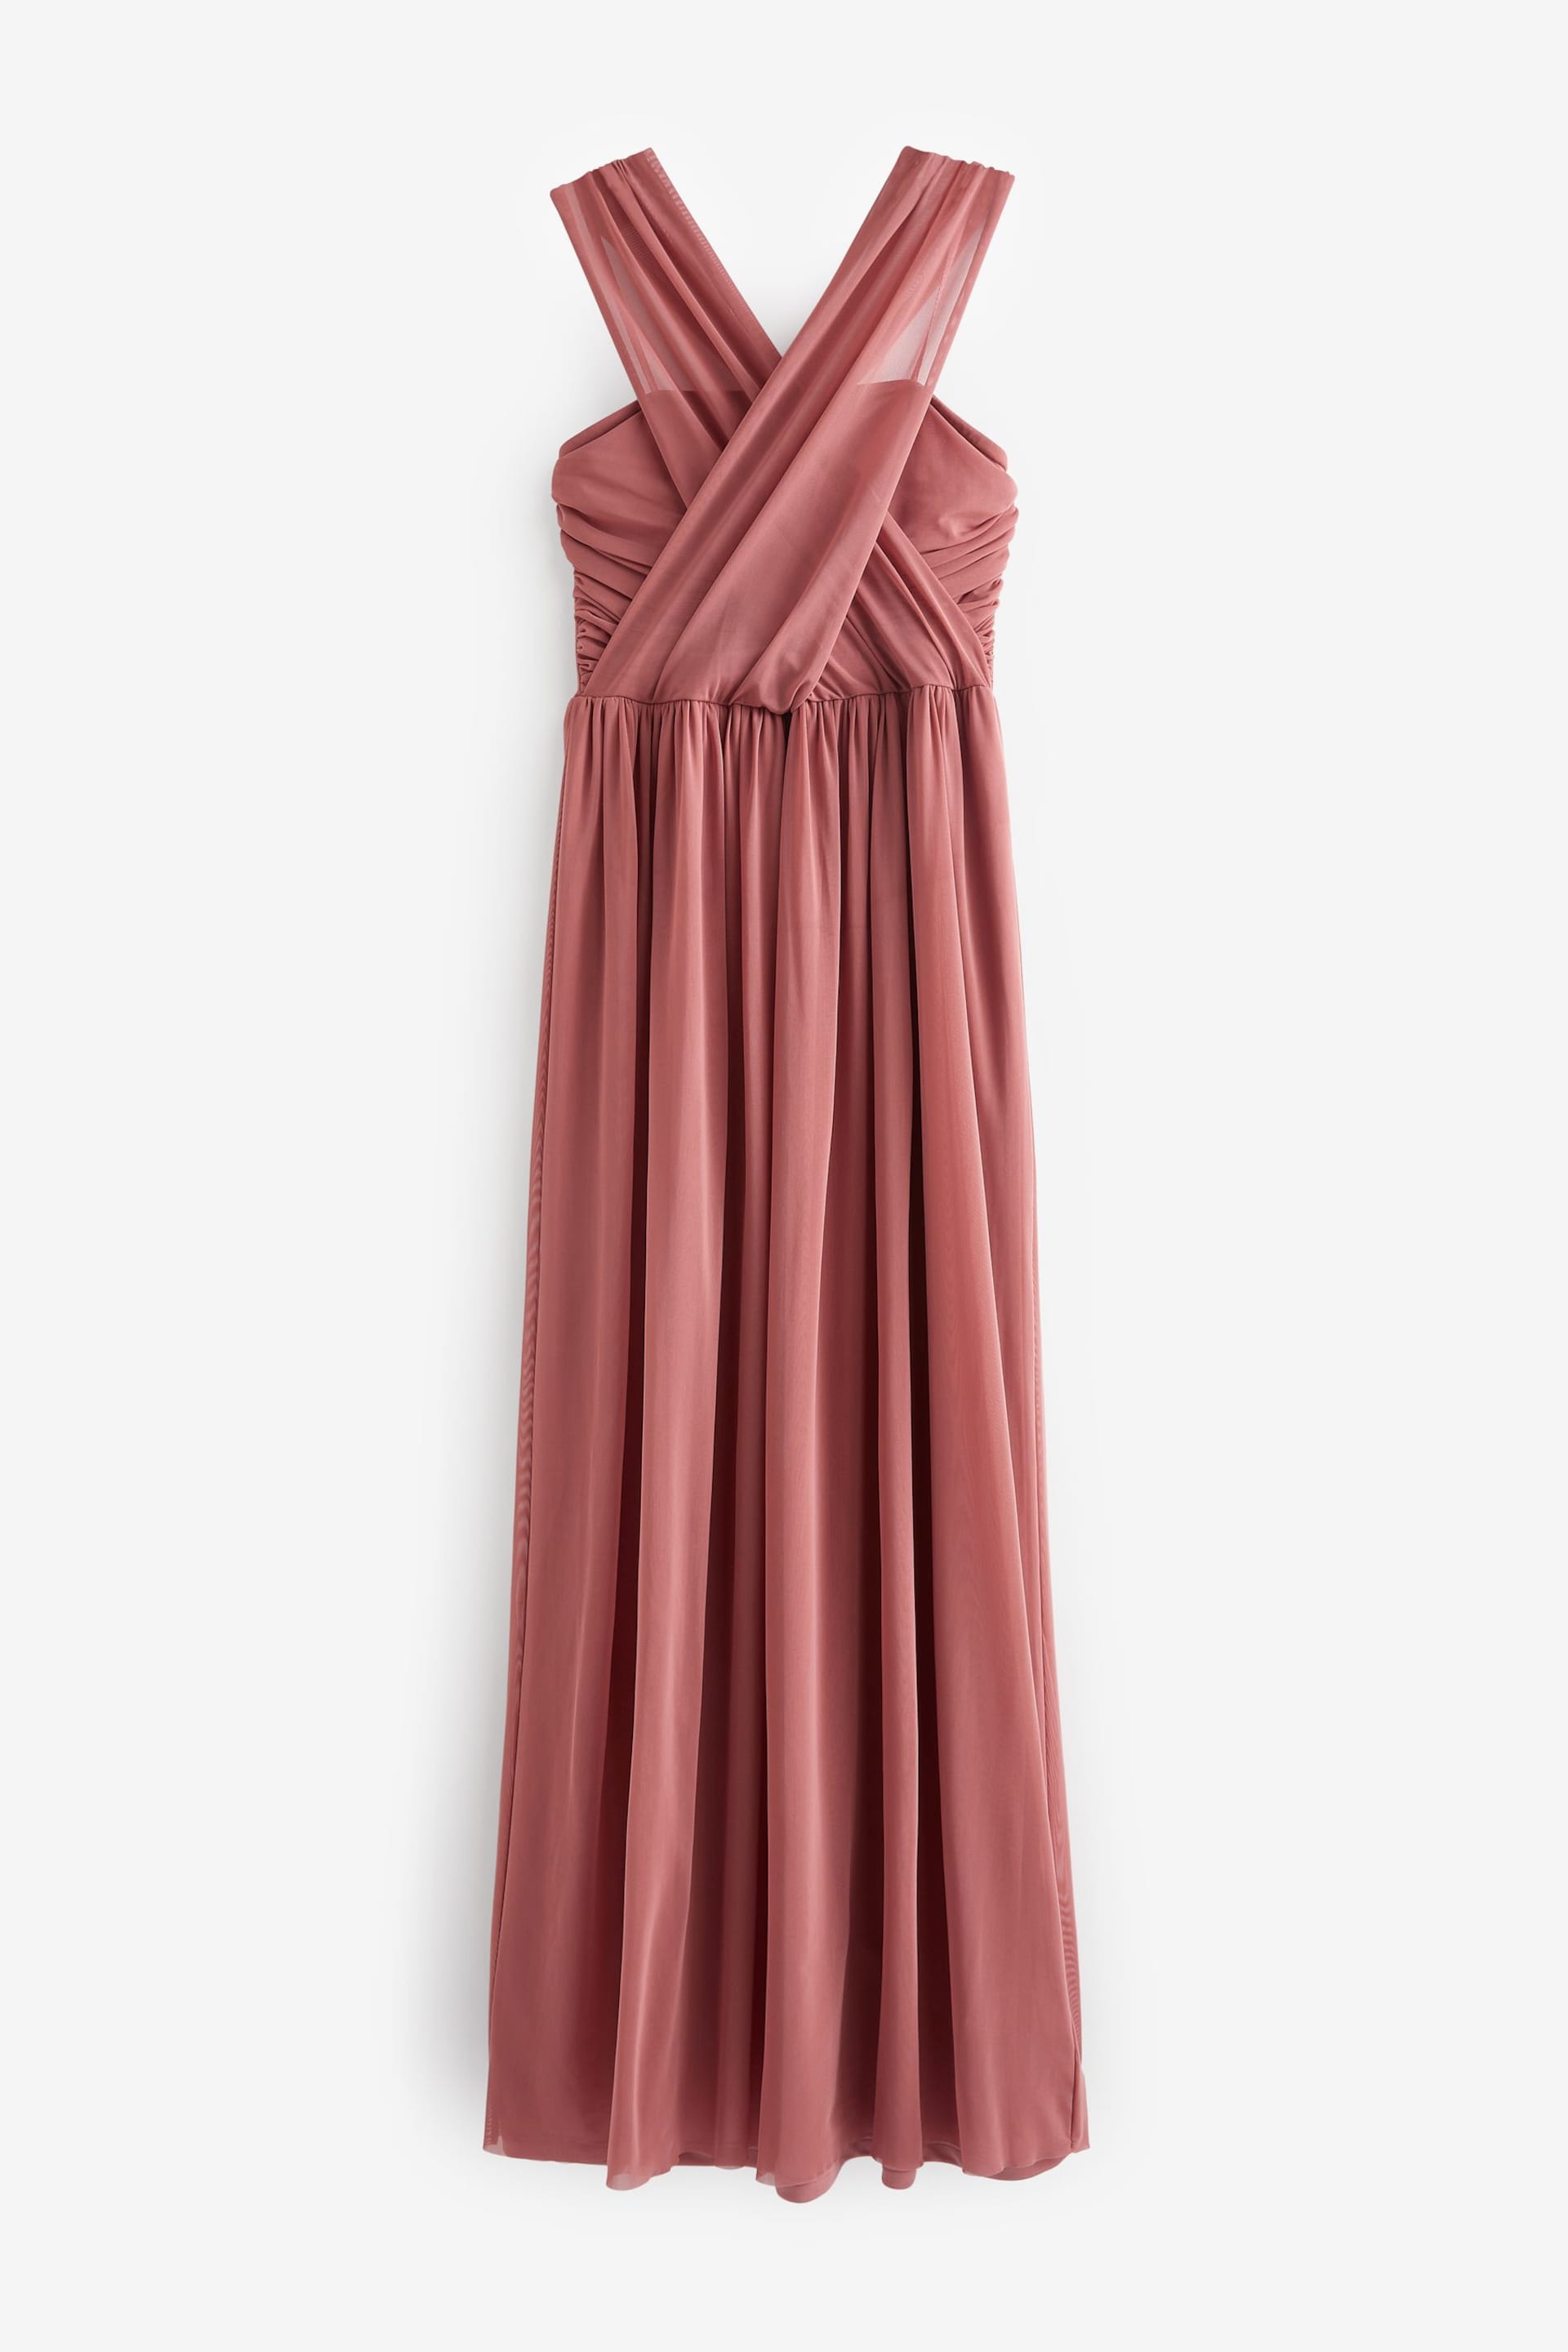 Rose Pink Mesh Multiway Bridesmaid Wedding Maxi Dress - Image 9 of 10